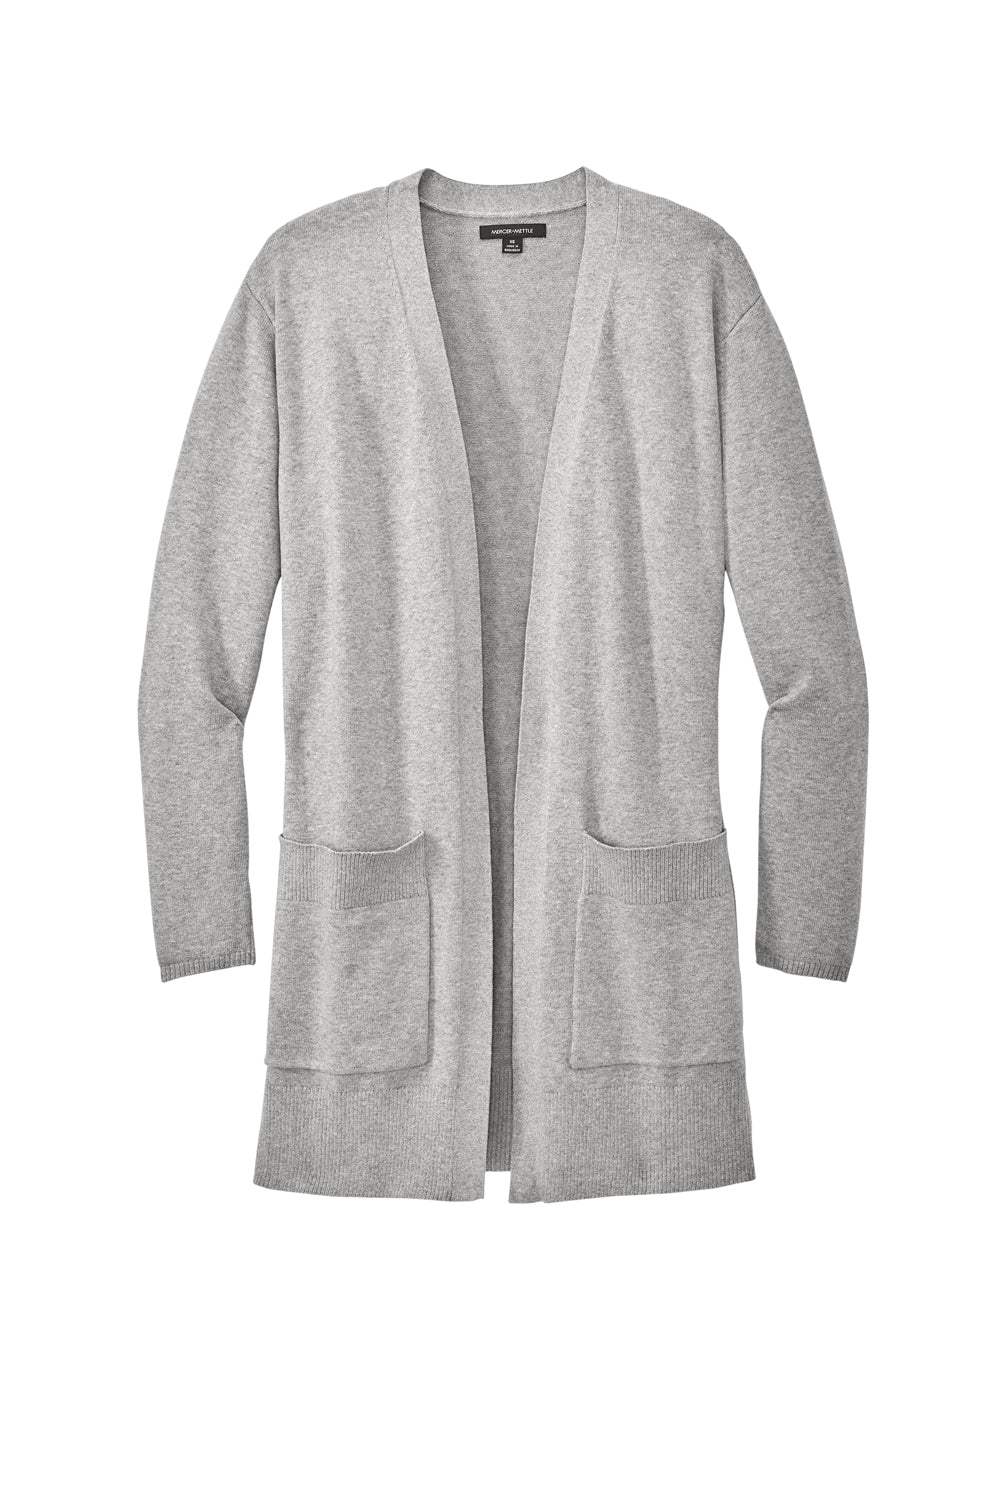 Mercer+Mettle MM3023 Womens Open Front Cardigan Sweater Heather Gusty Grey Flat Front